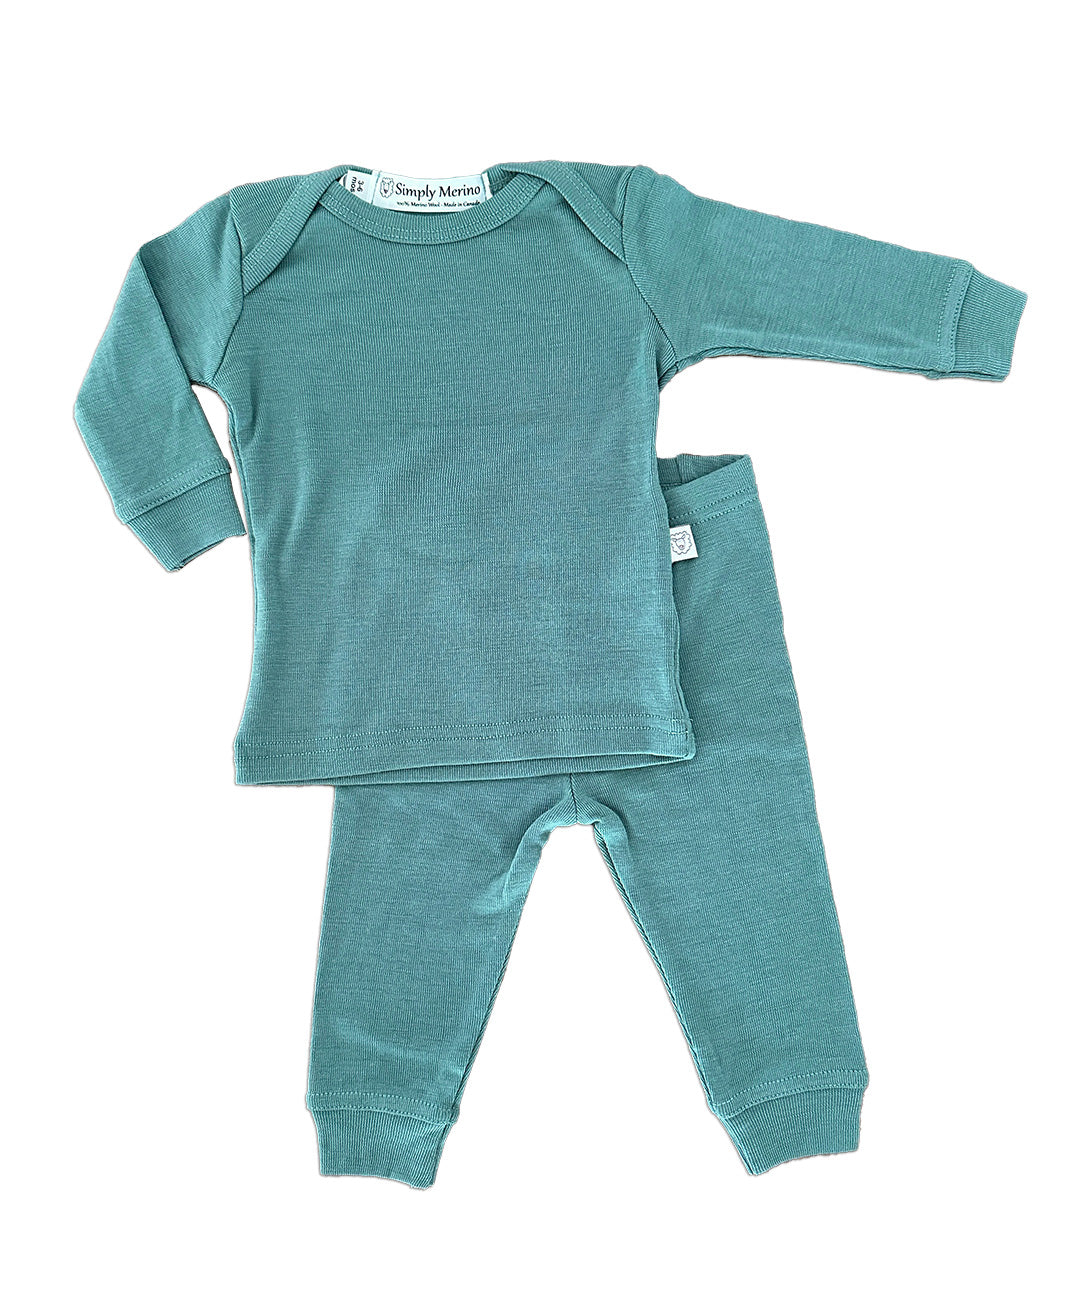 Simply merino 100% wool baby pajamas in blue willow